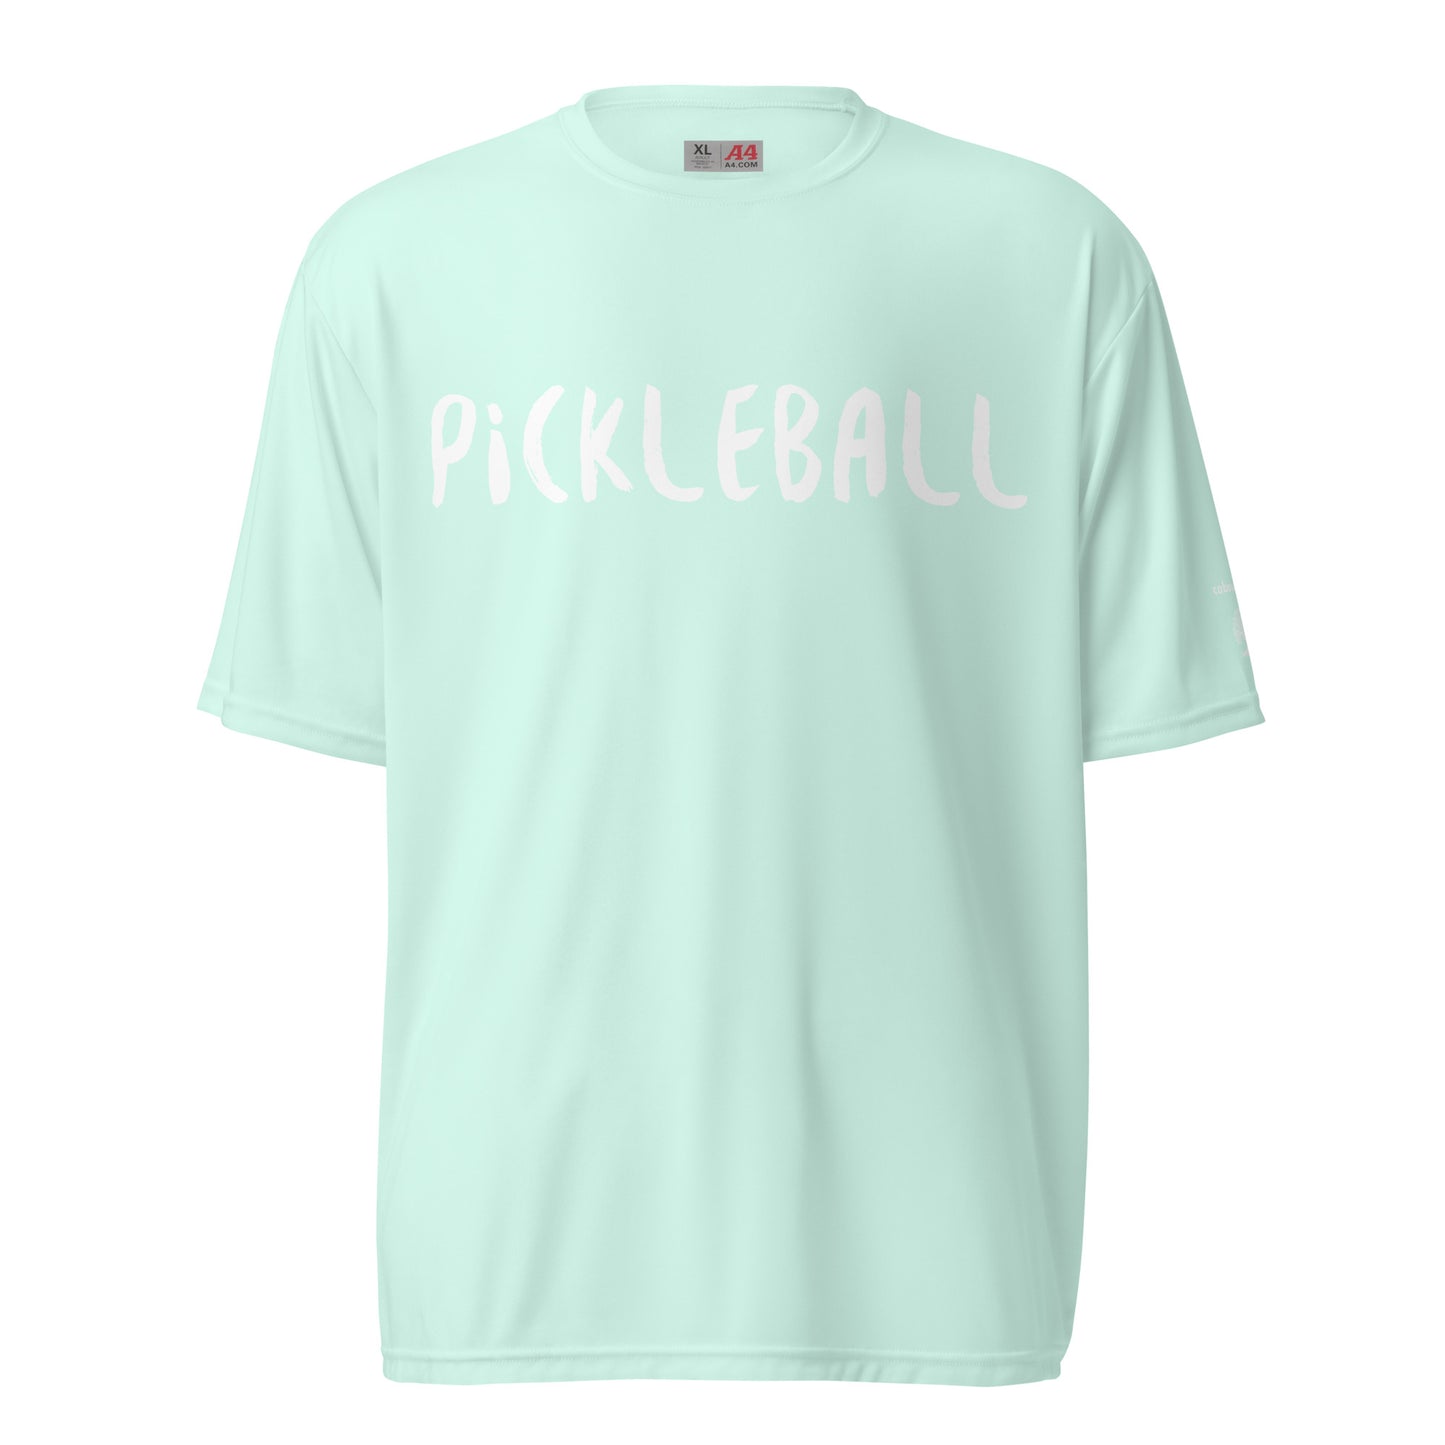 Unisex performance crew neck t-shirt - Pickleball